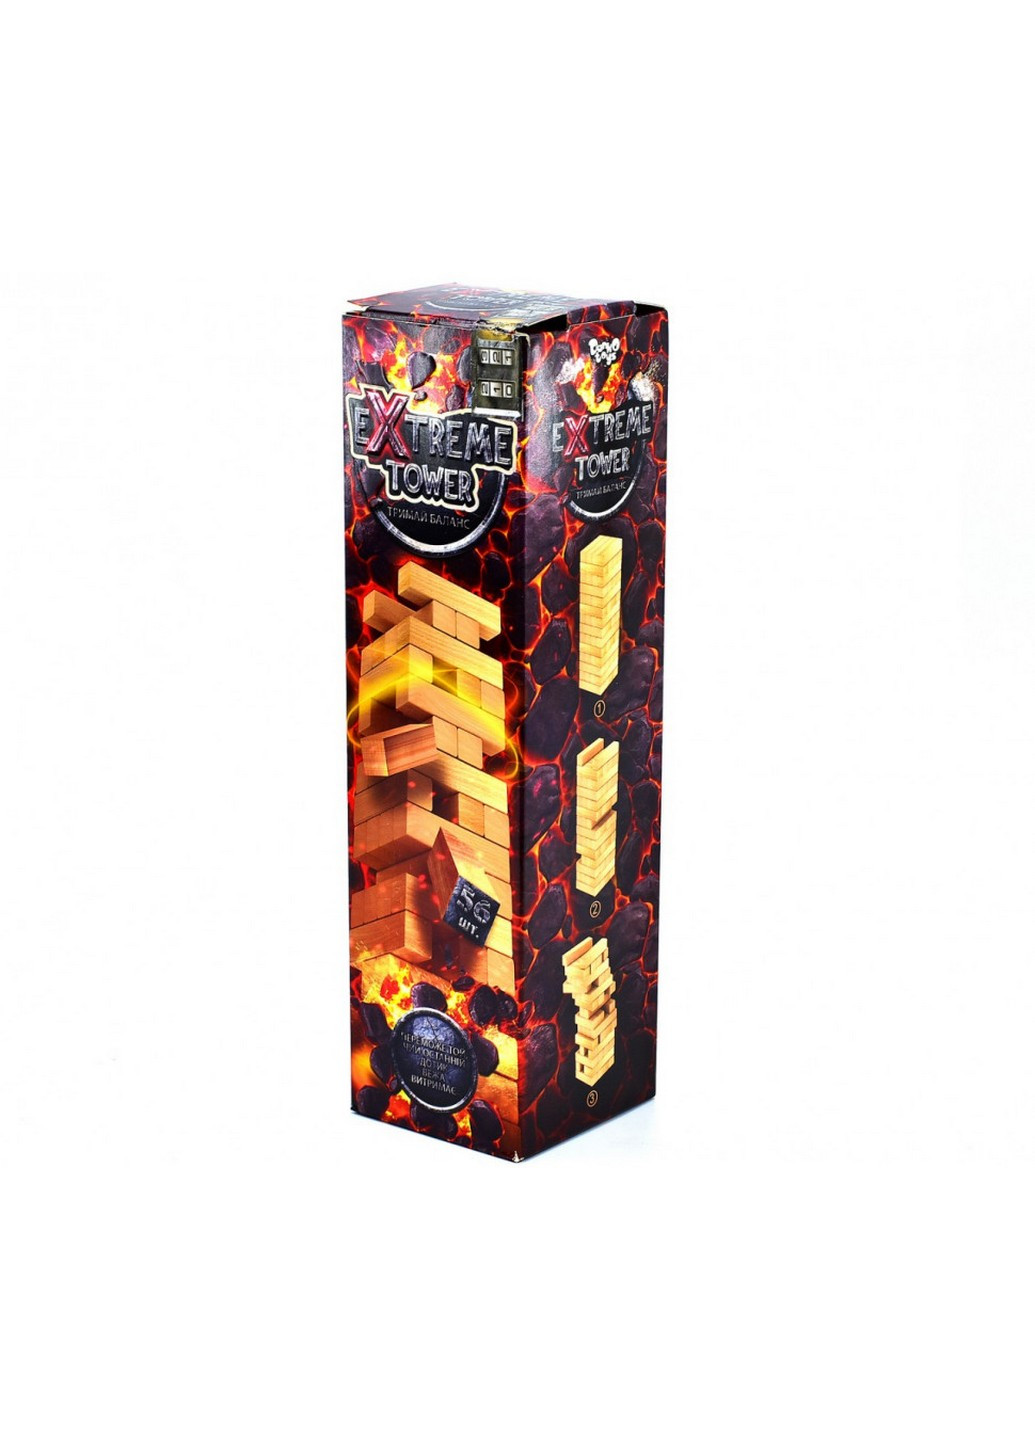 Развивающая настольная игра Дженга "EXTREME TOWER", 56 брусков 27х7х7 см Danko Toys (257201692)